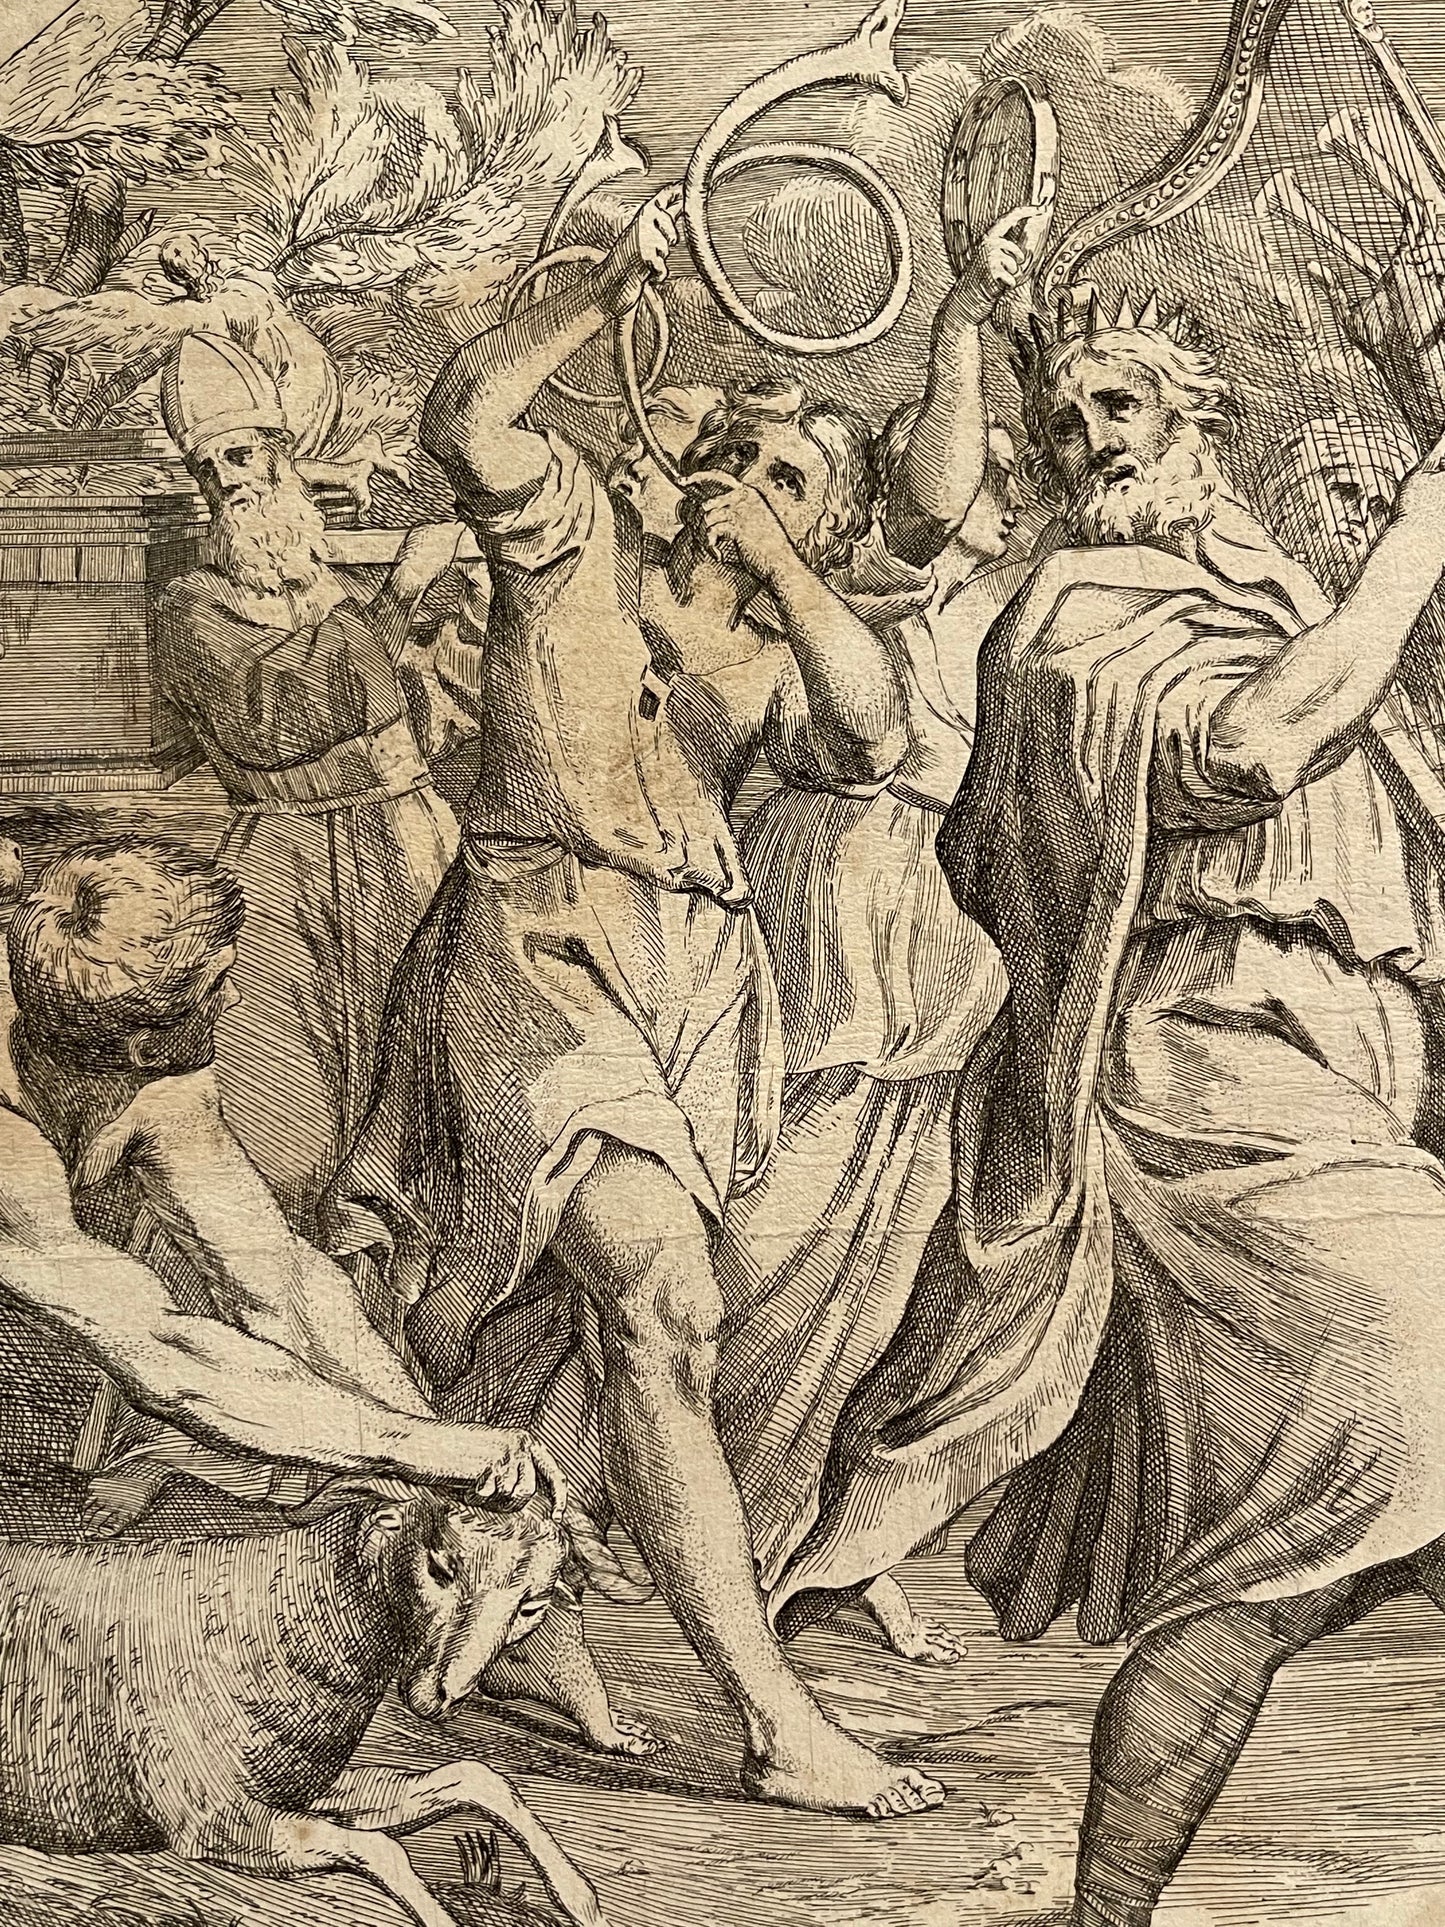 Francesco Bartolozzi Etching: "King David dances before the Ark of the Covenant"